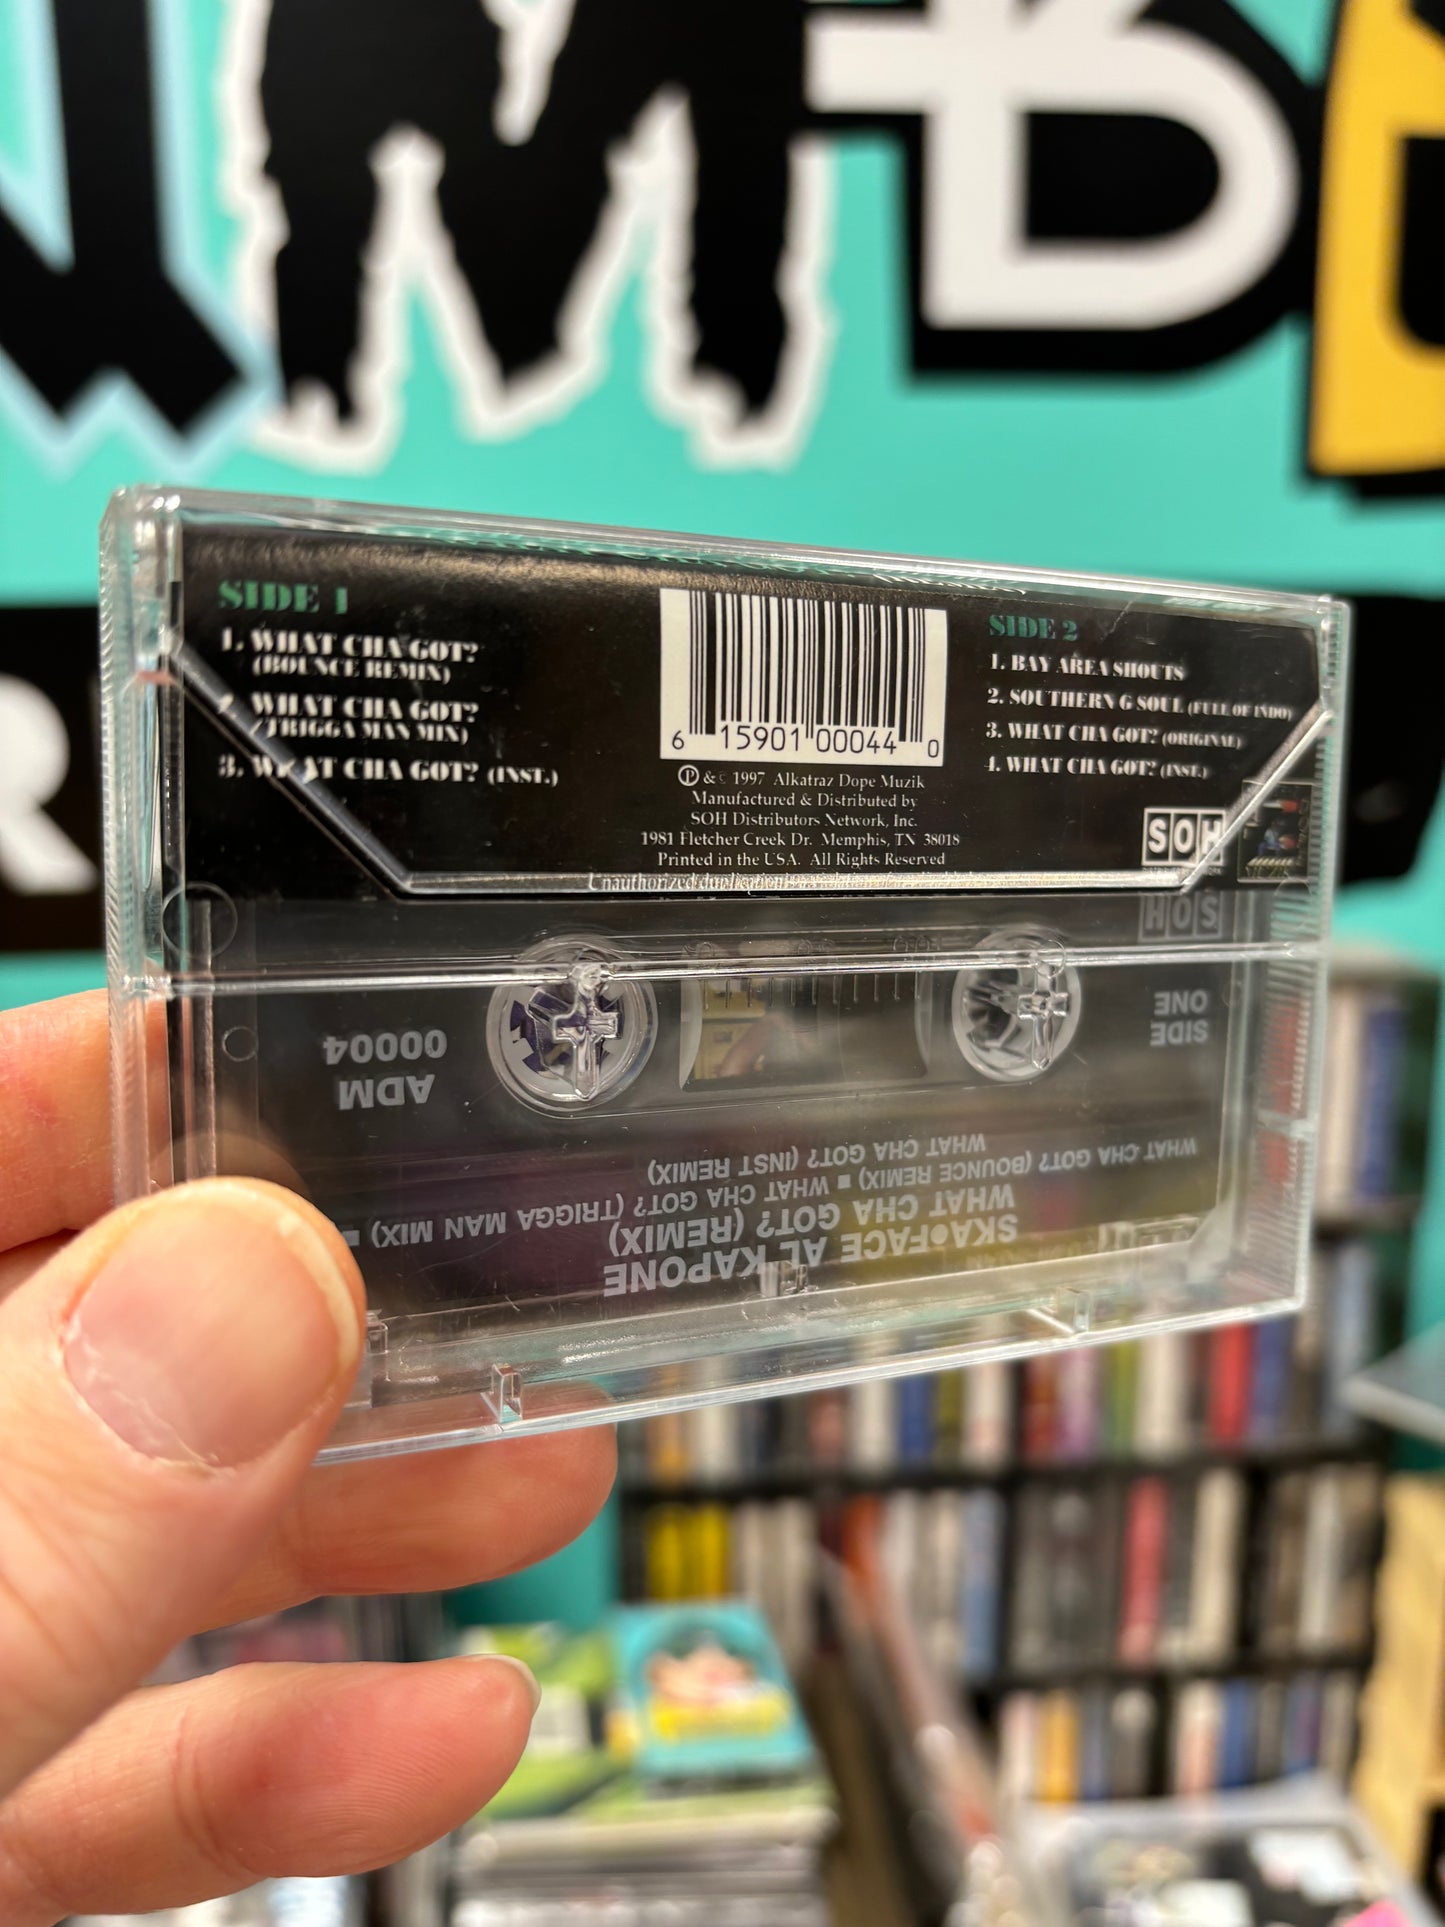 Al Kapone: What Cha Got (Remix), C-cassette Maxi-single, OG pressing, US 1997